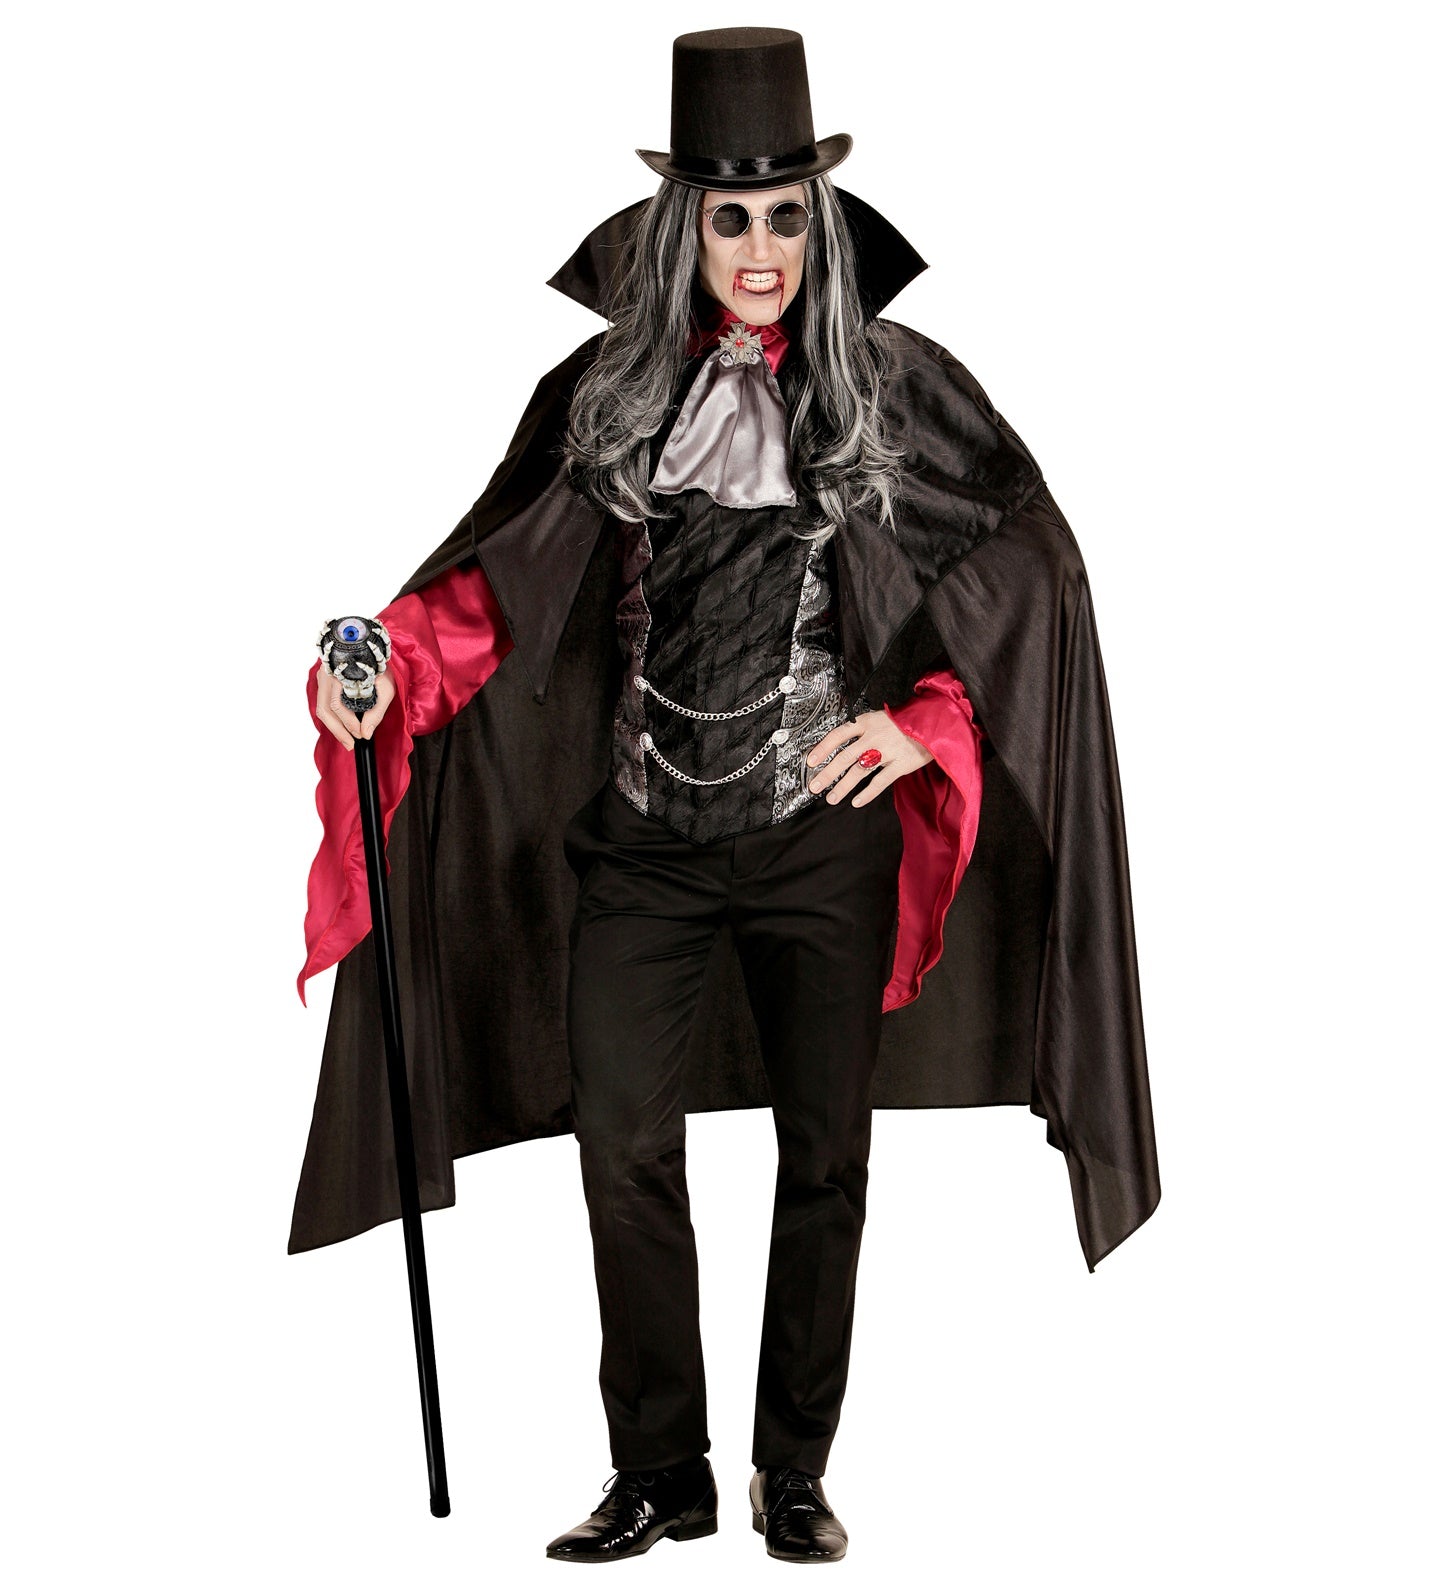 Vampire Cane with Floating Eyeball costume accessory